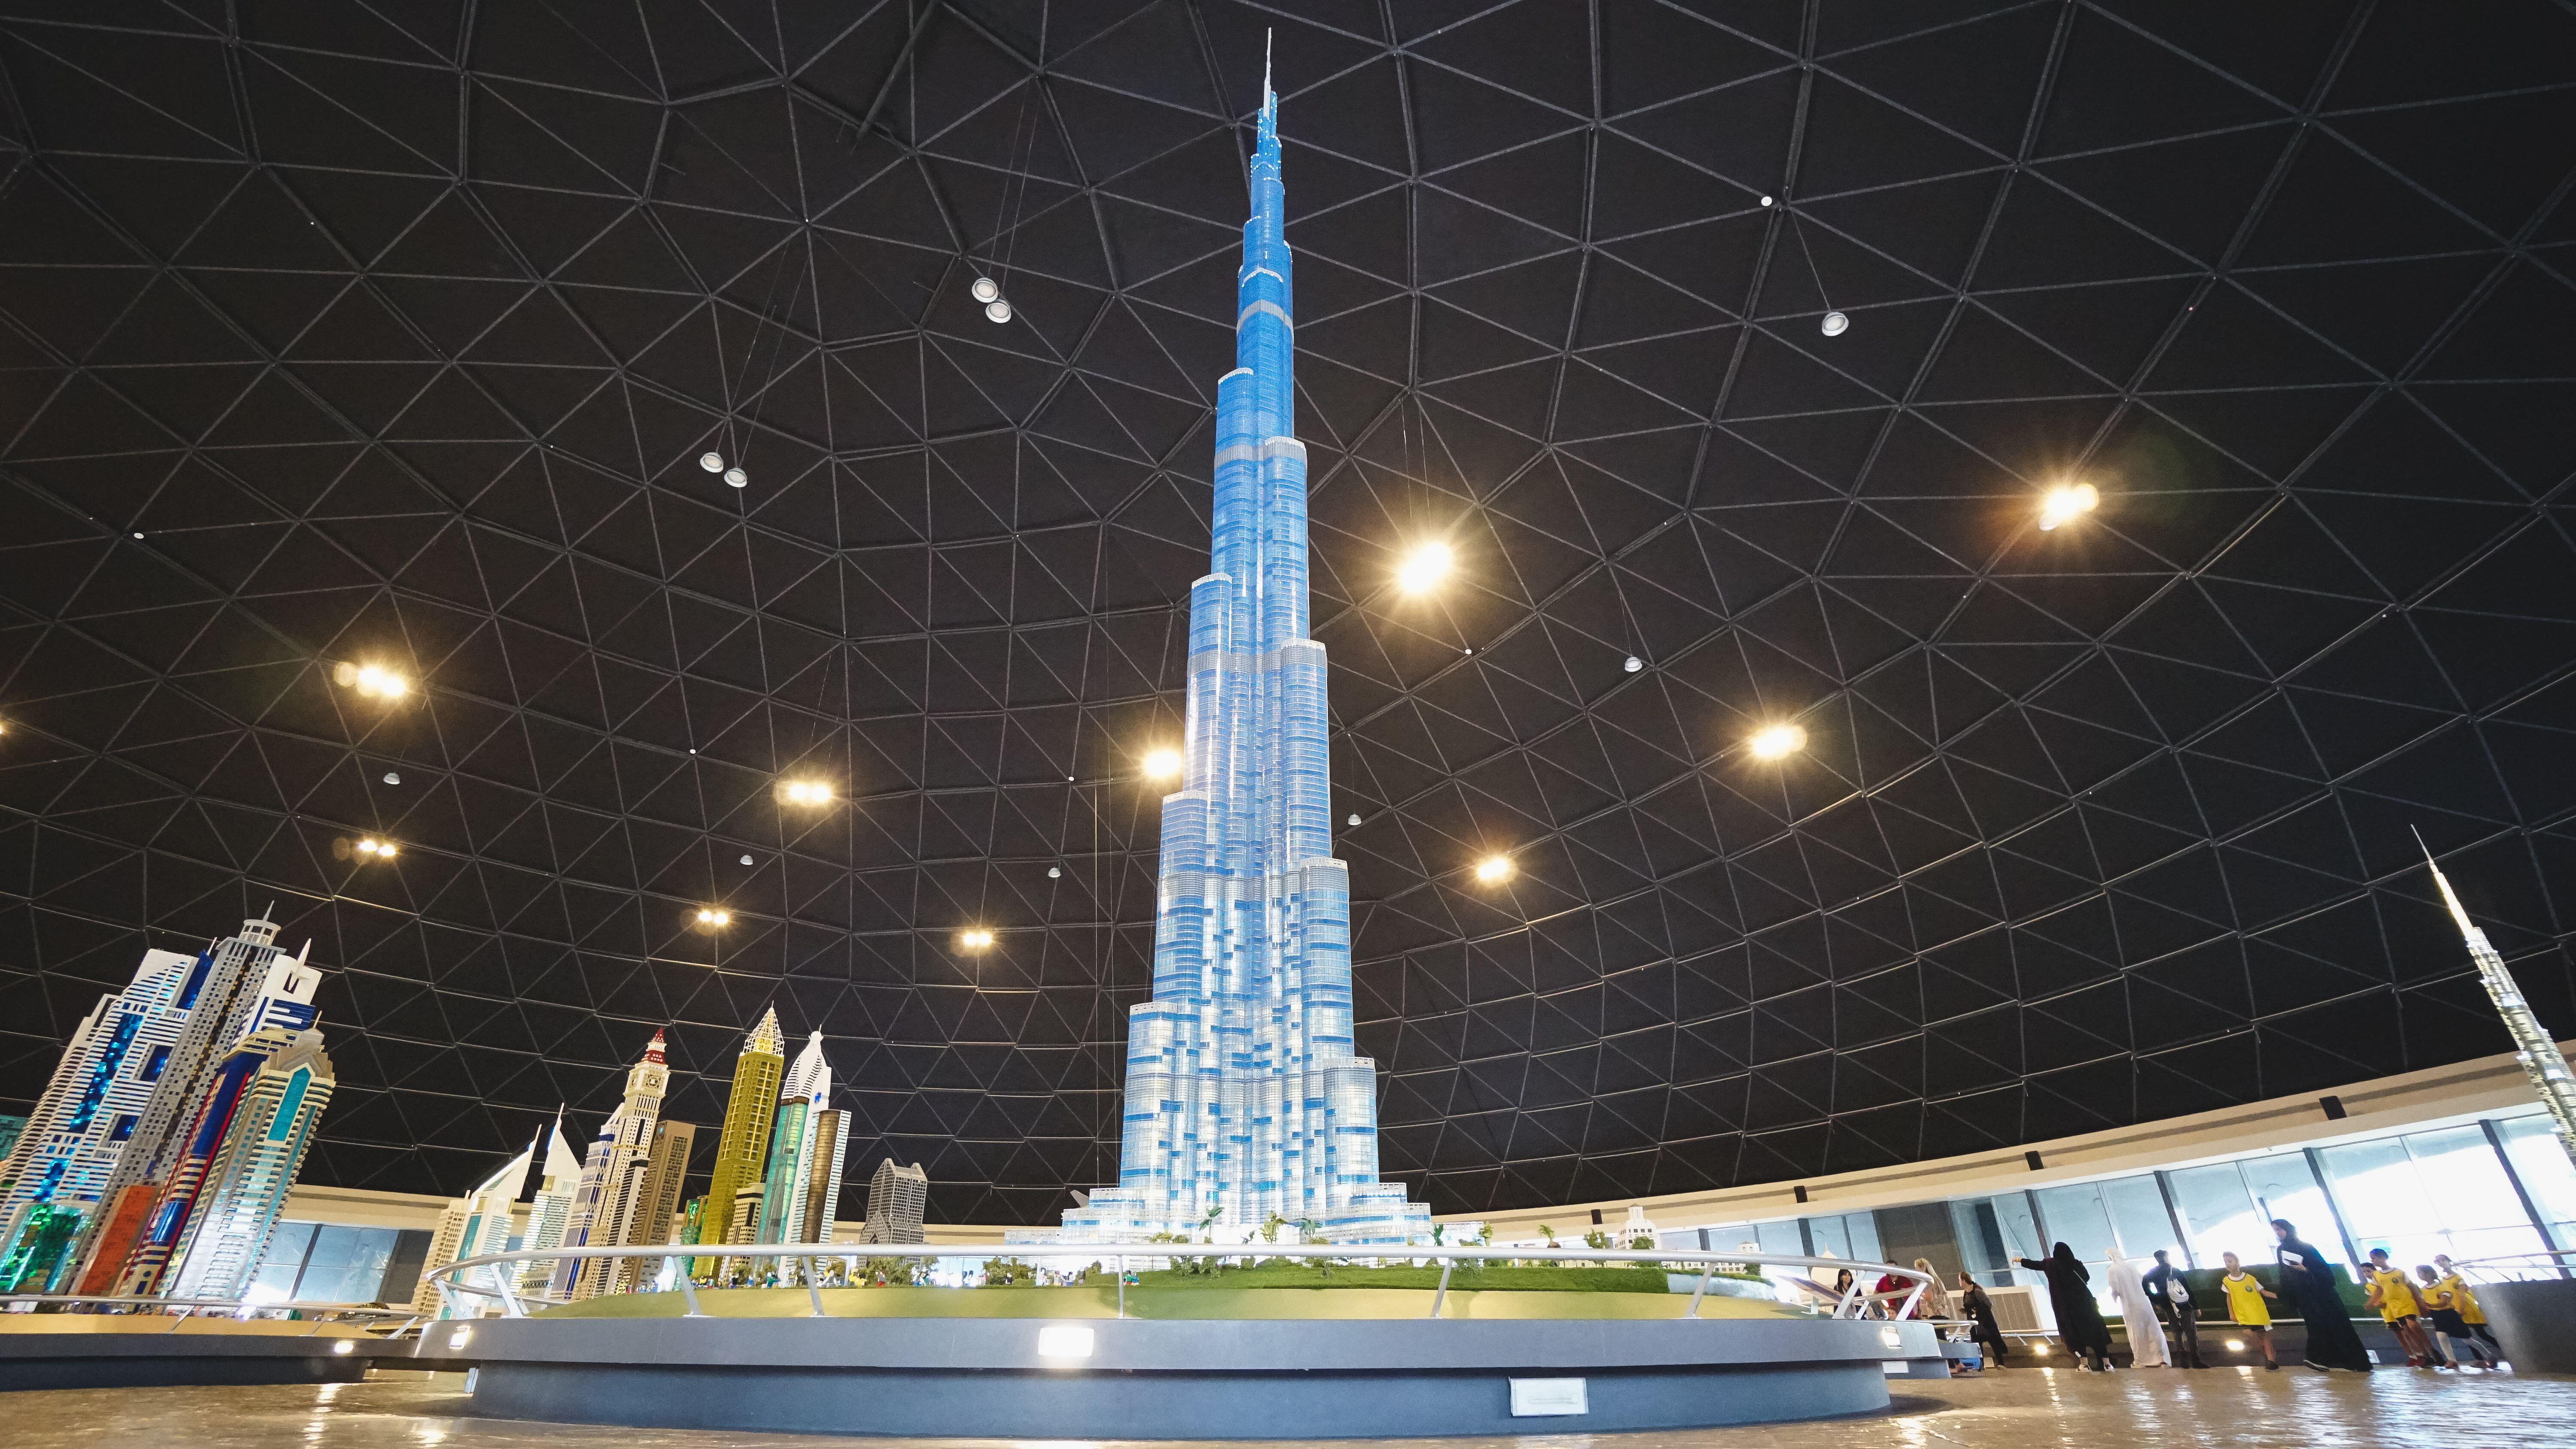 Legoland’s version of the world's tallest building, the Burj Khalifa